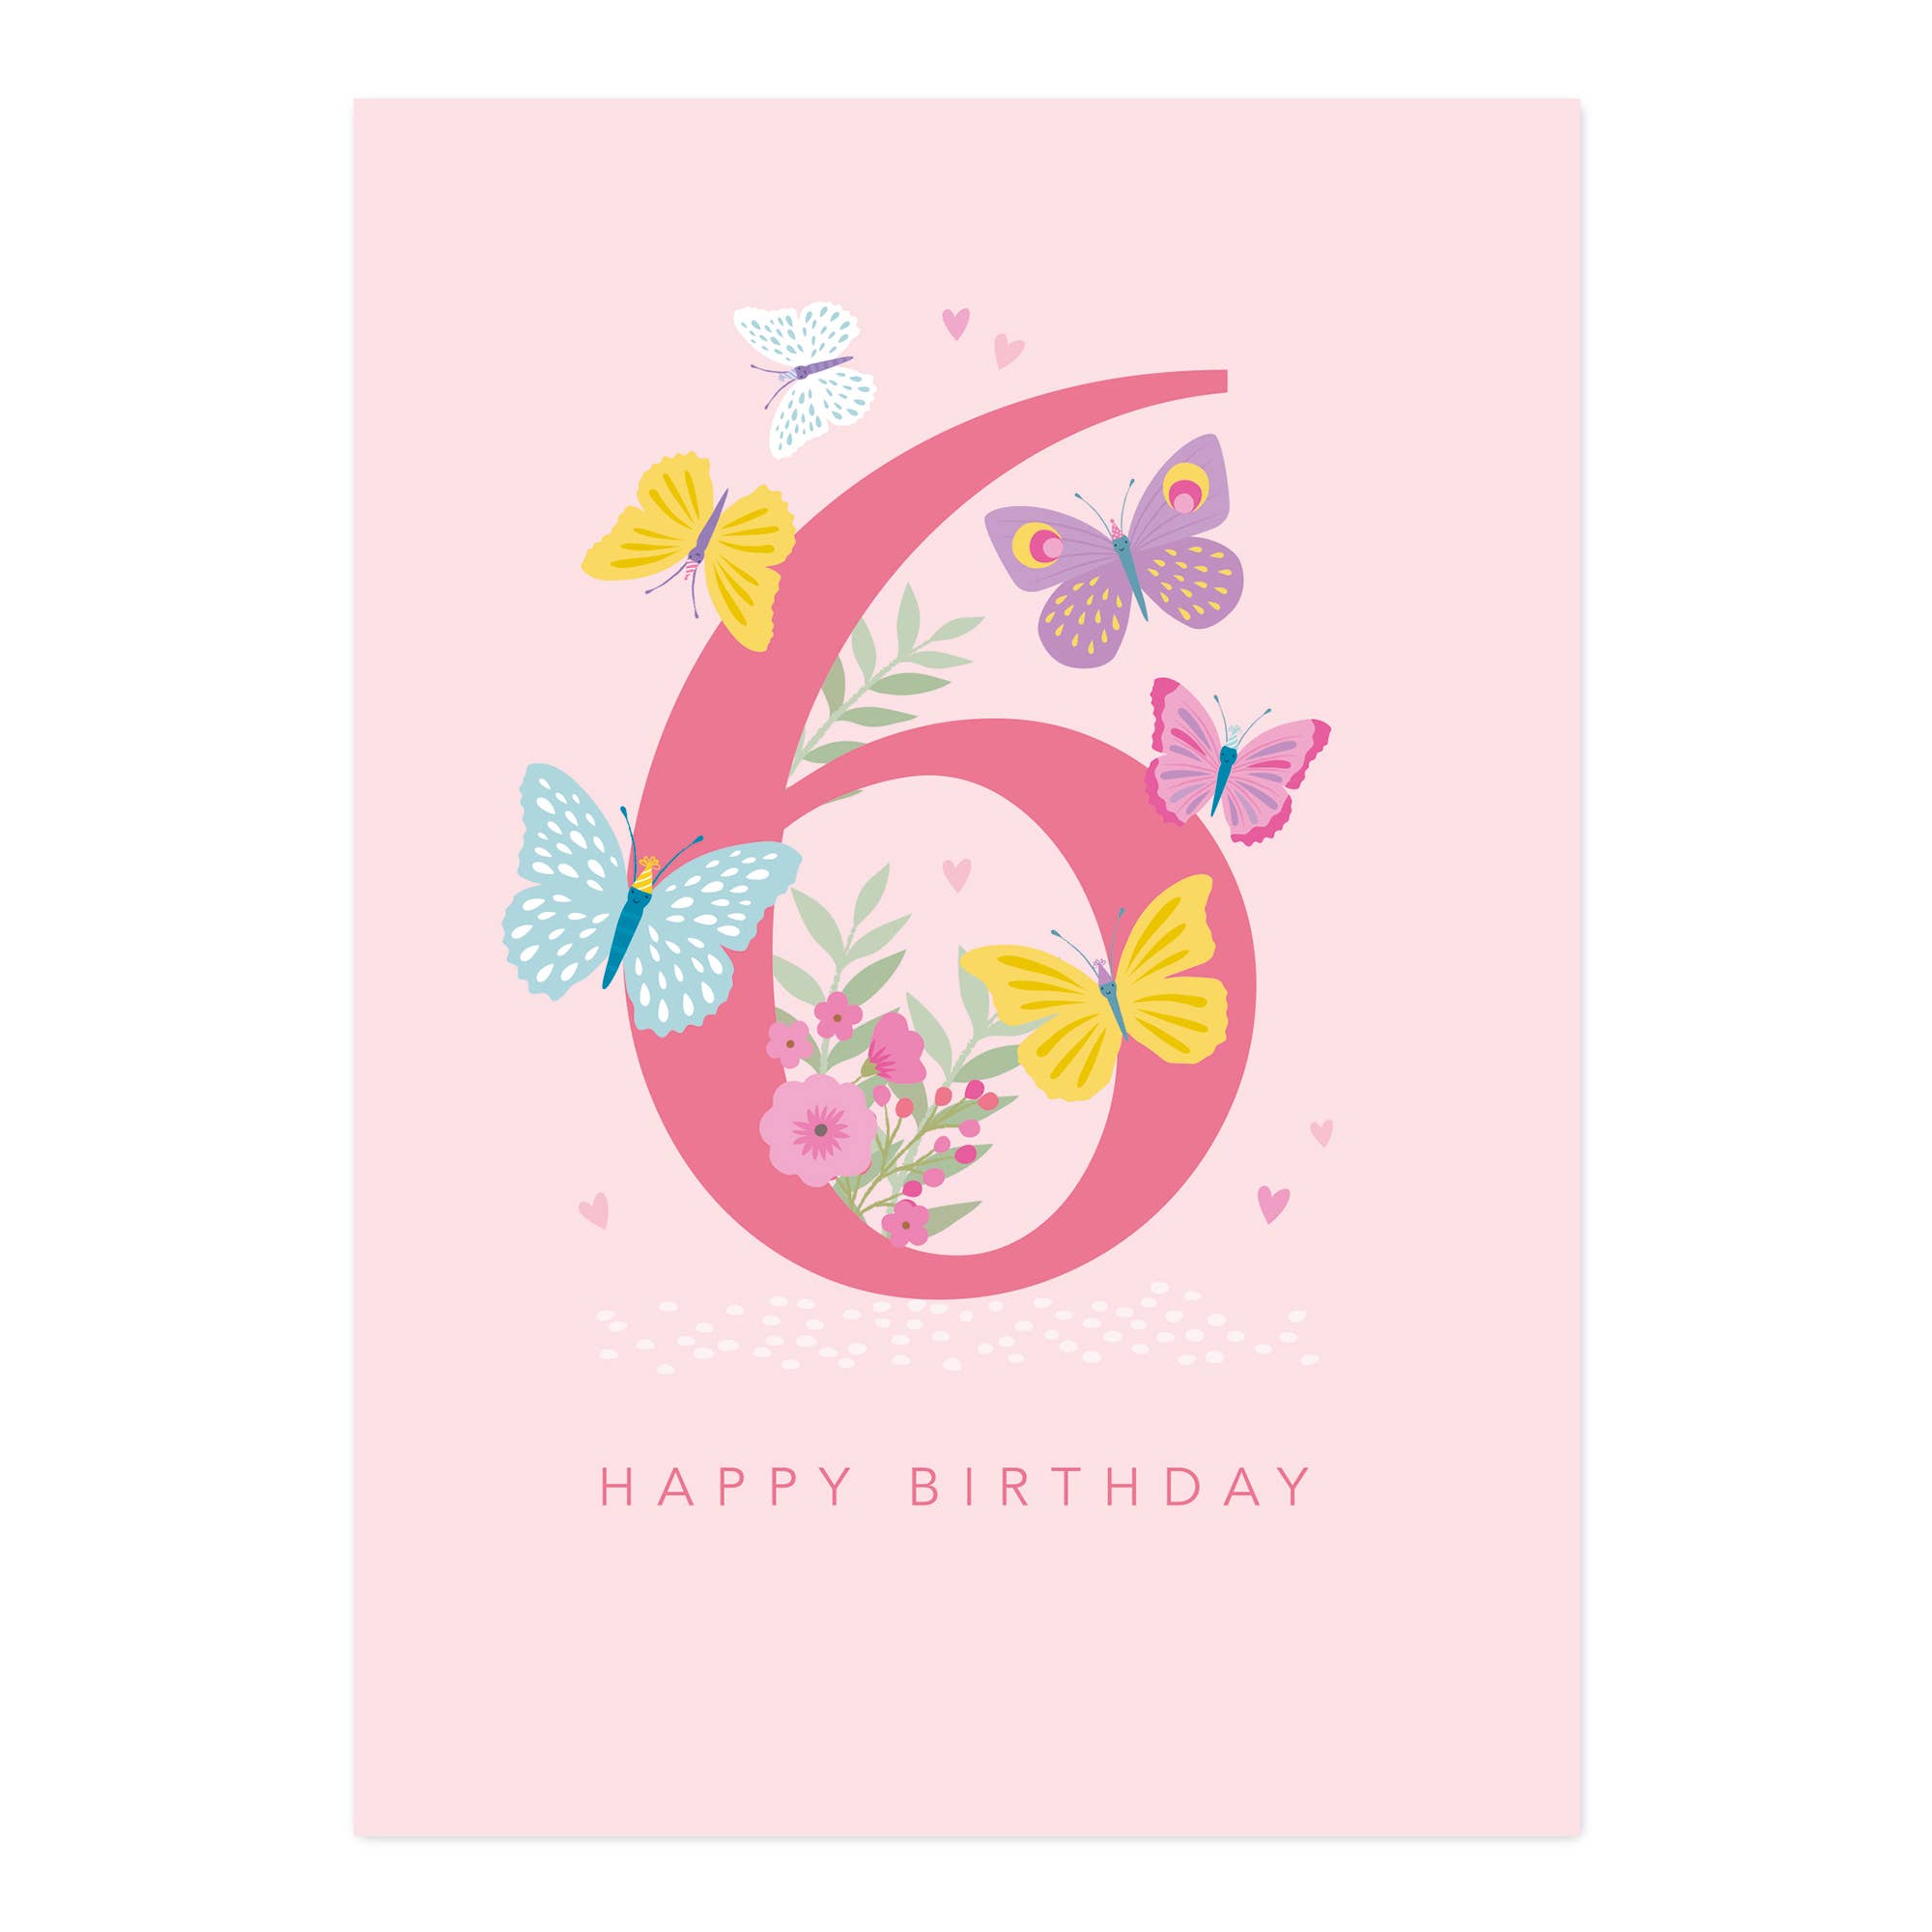 Happy Birthday - Age 6 Butterflies Card